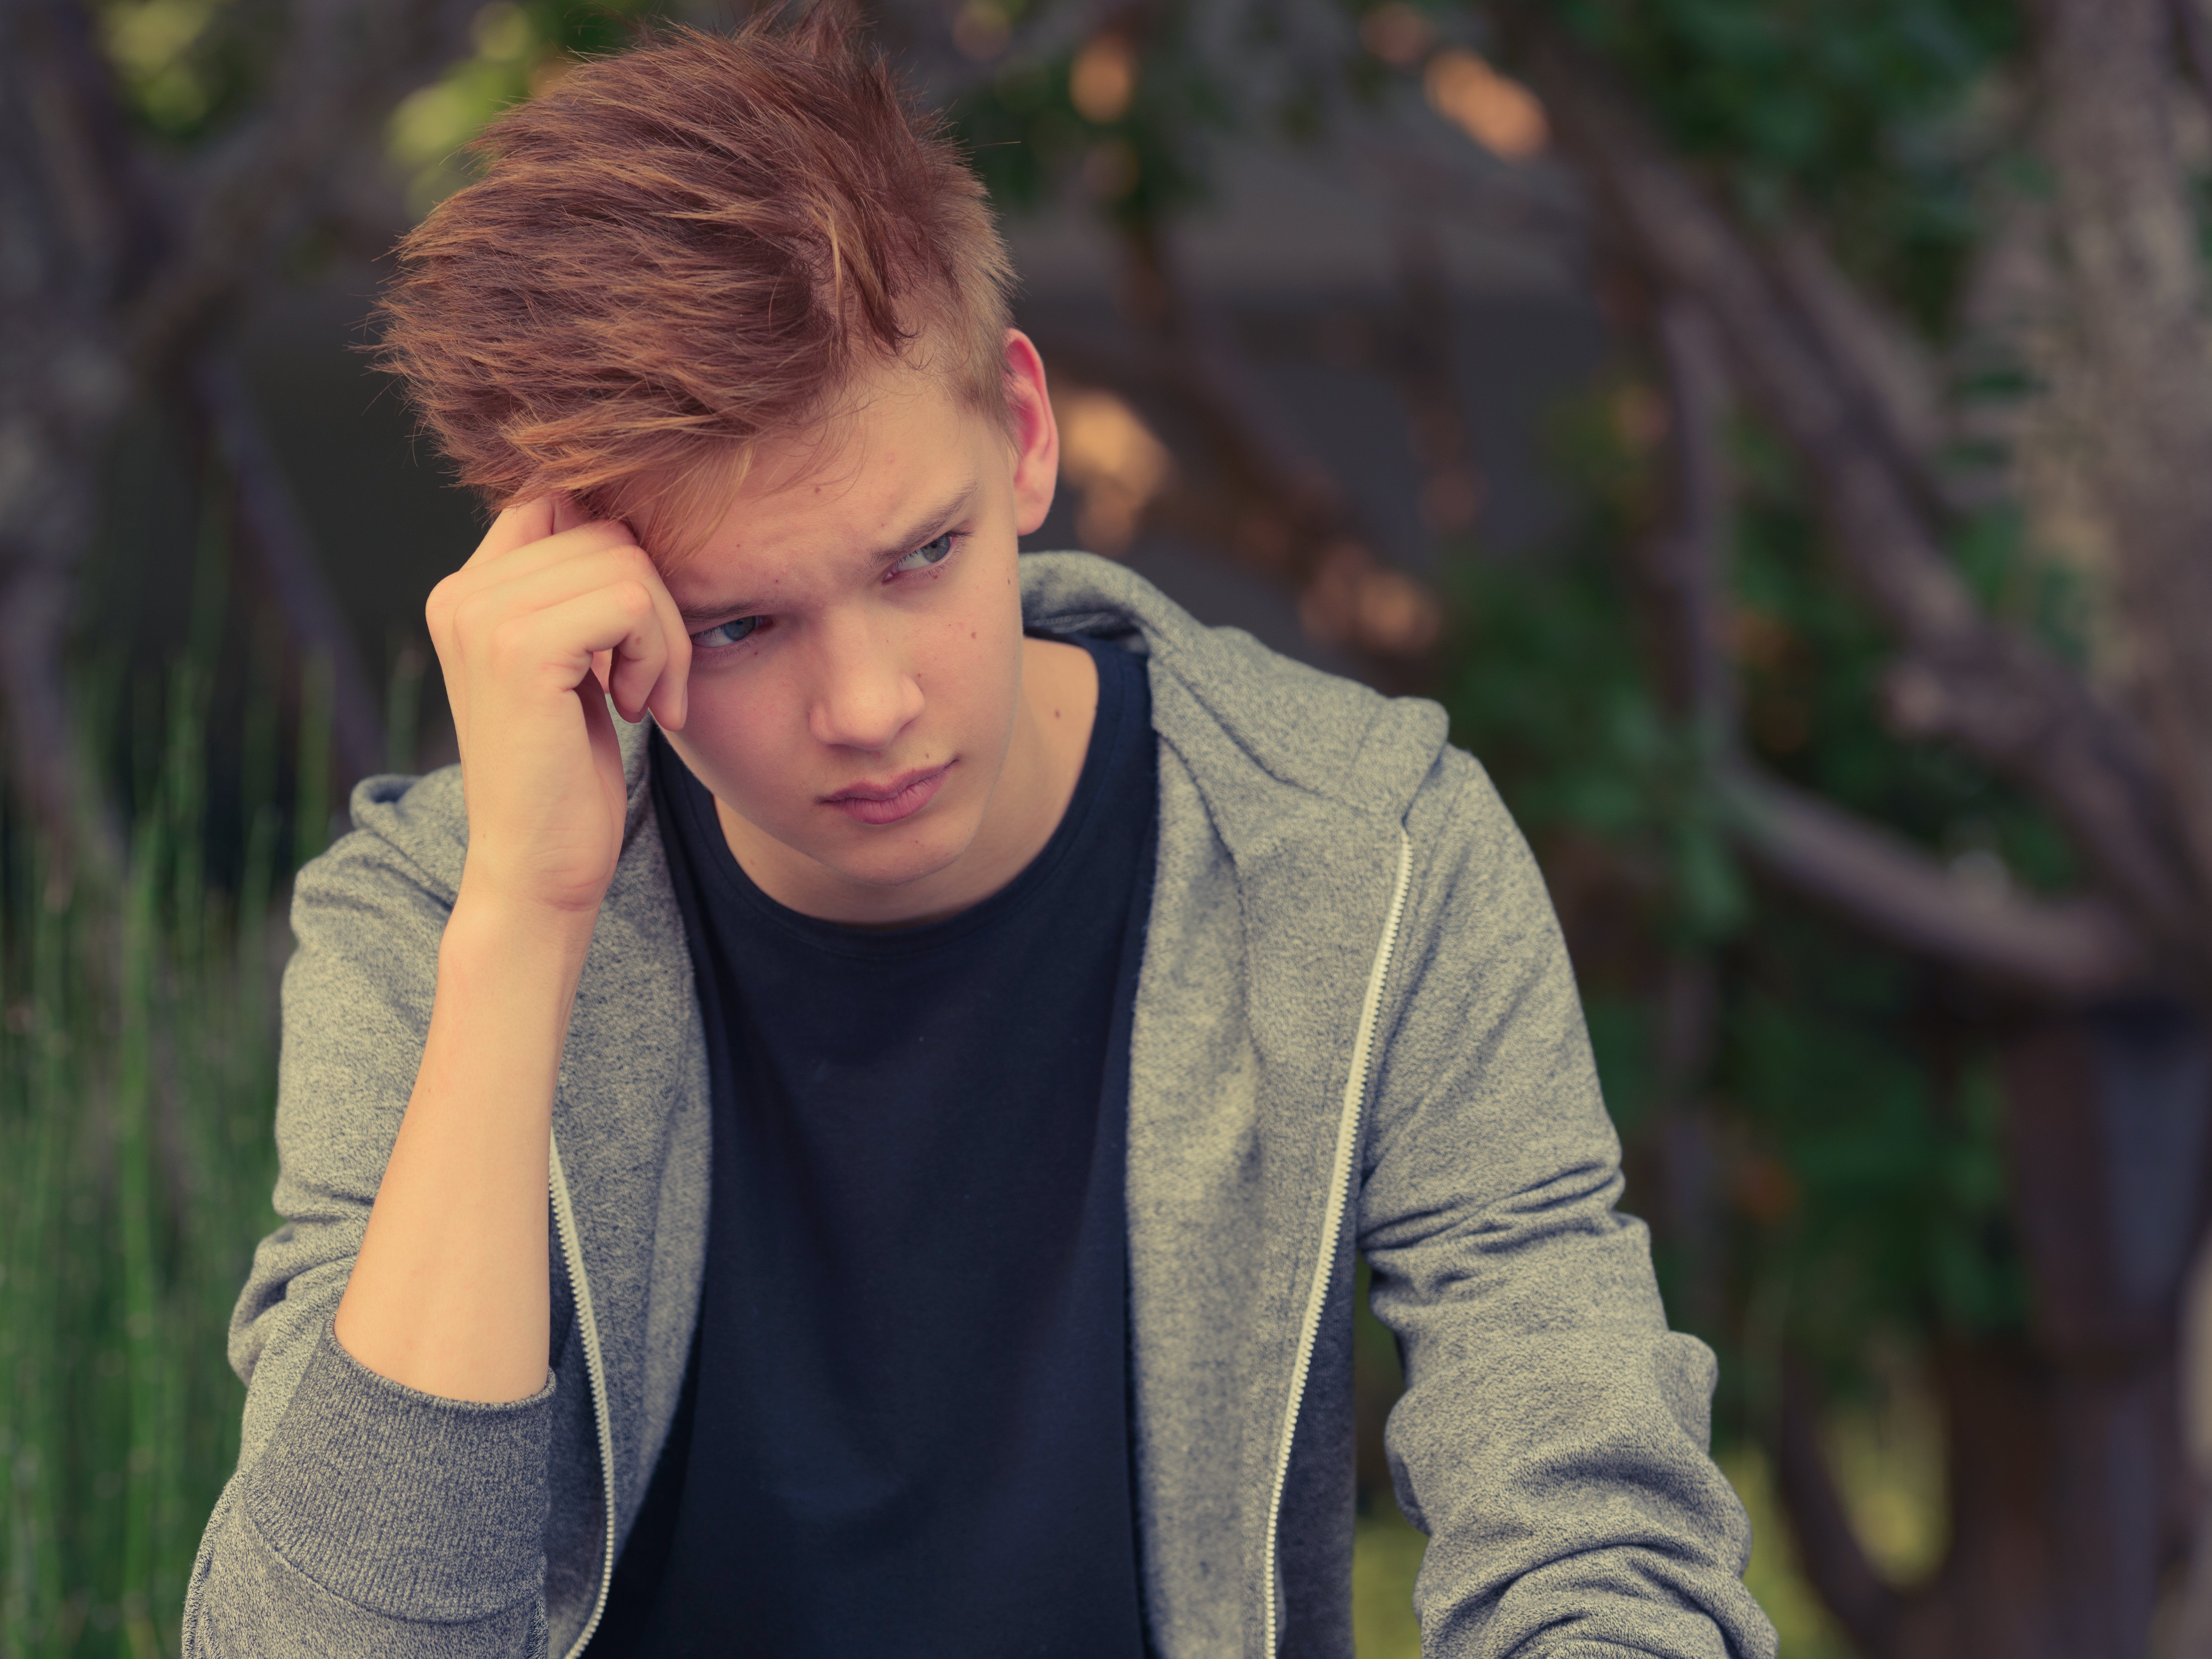 A sad teenager | Source: Shutterstock